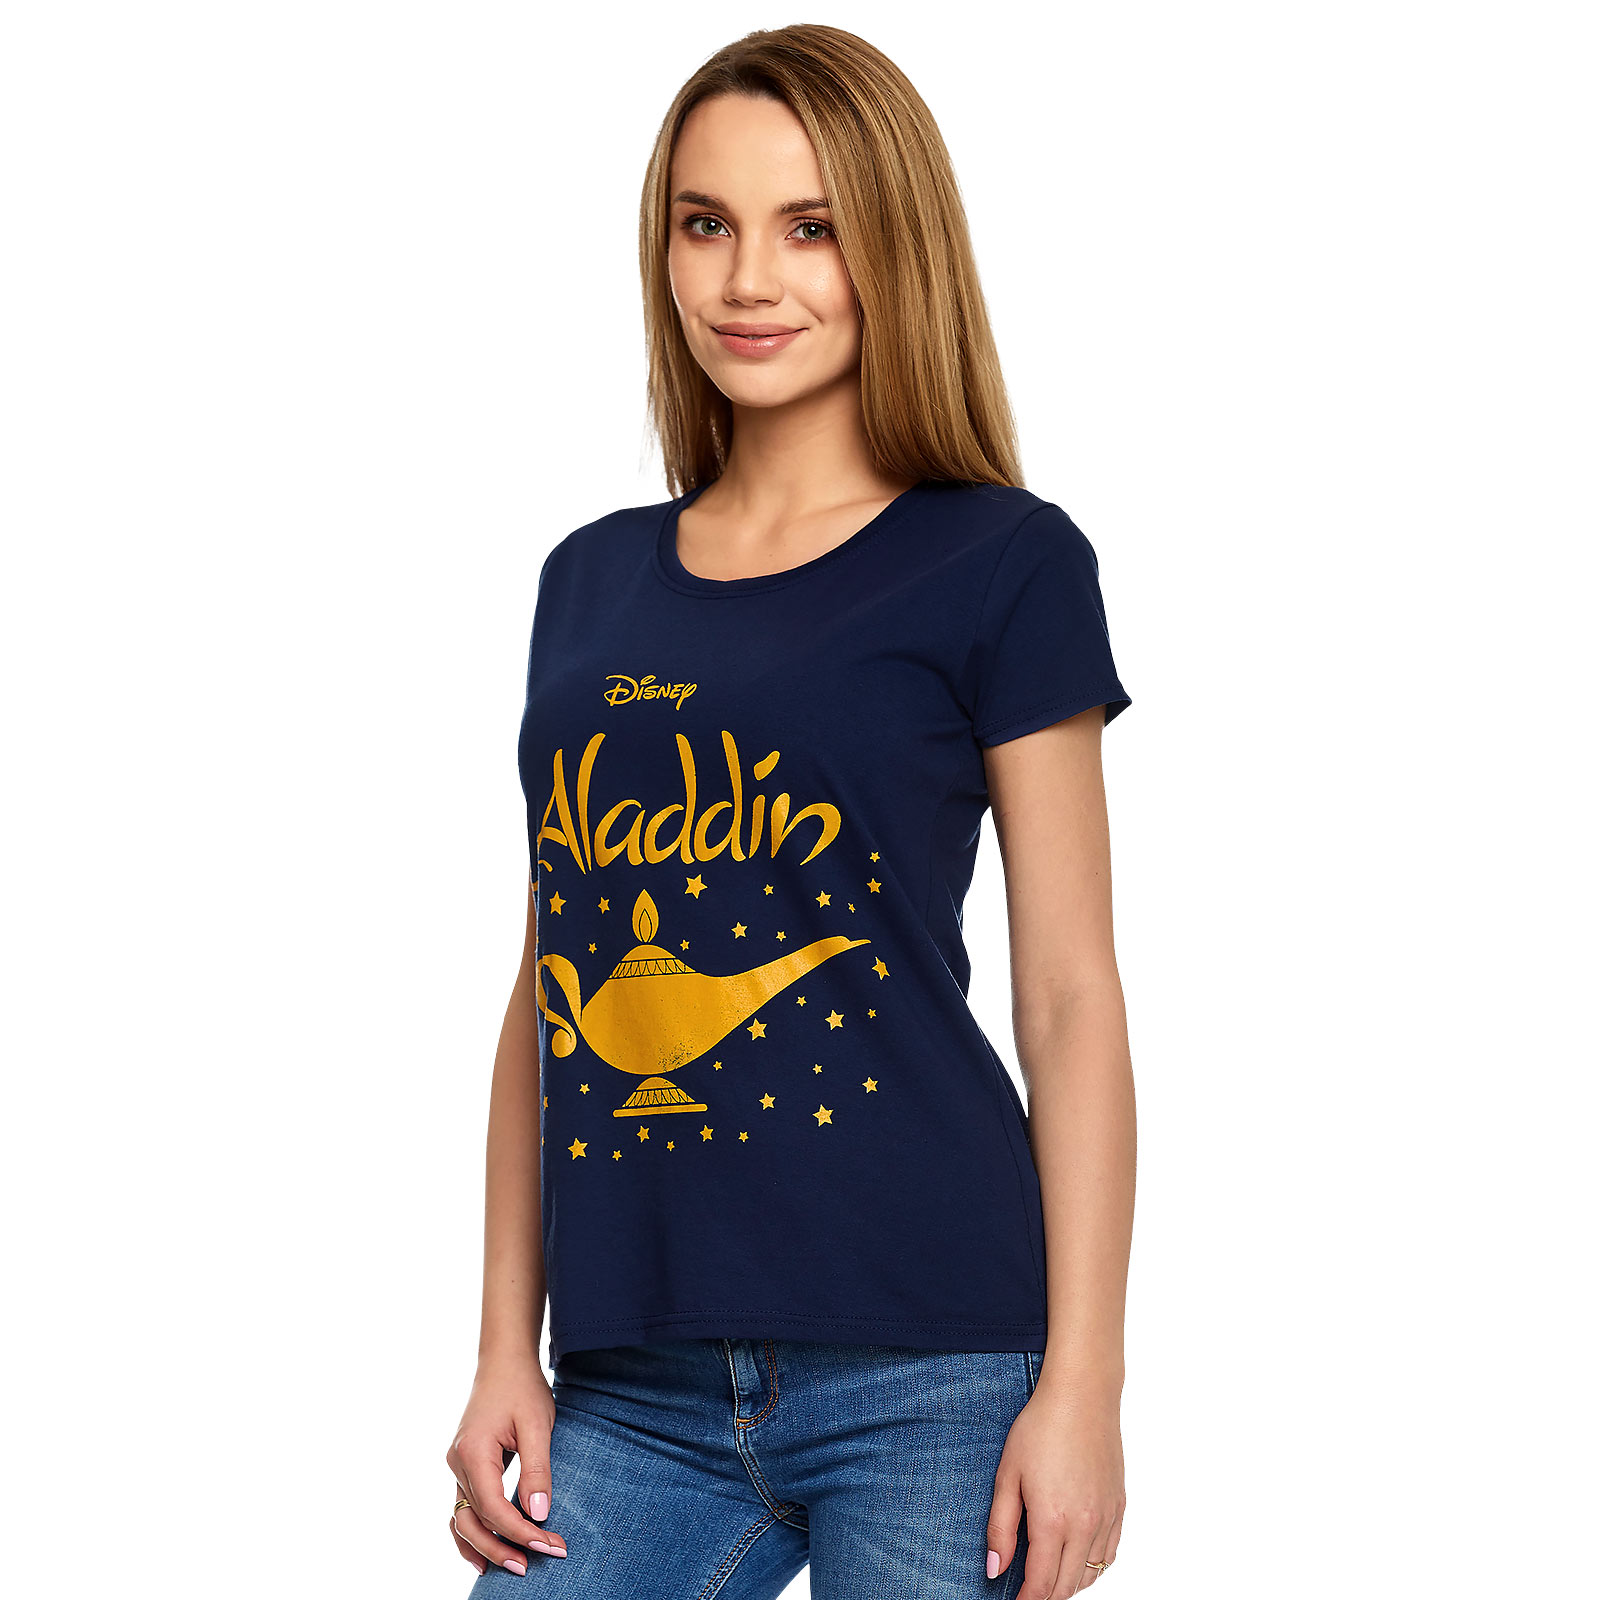 Aladdin - Wunderlampe T-Shirt Damen blau